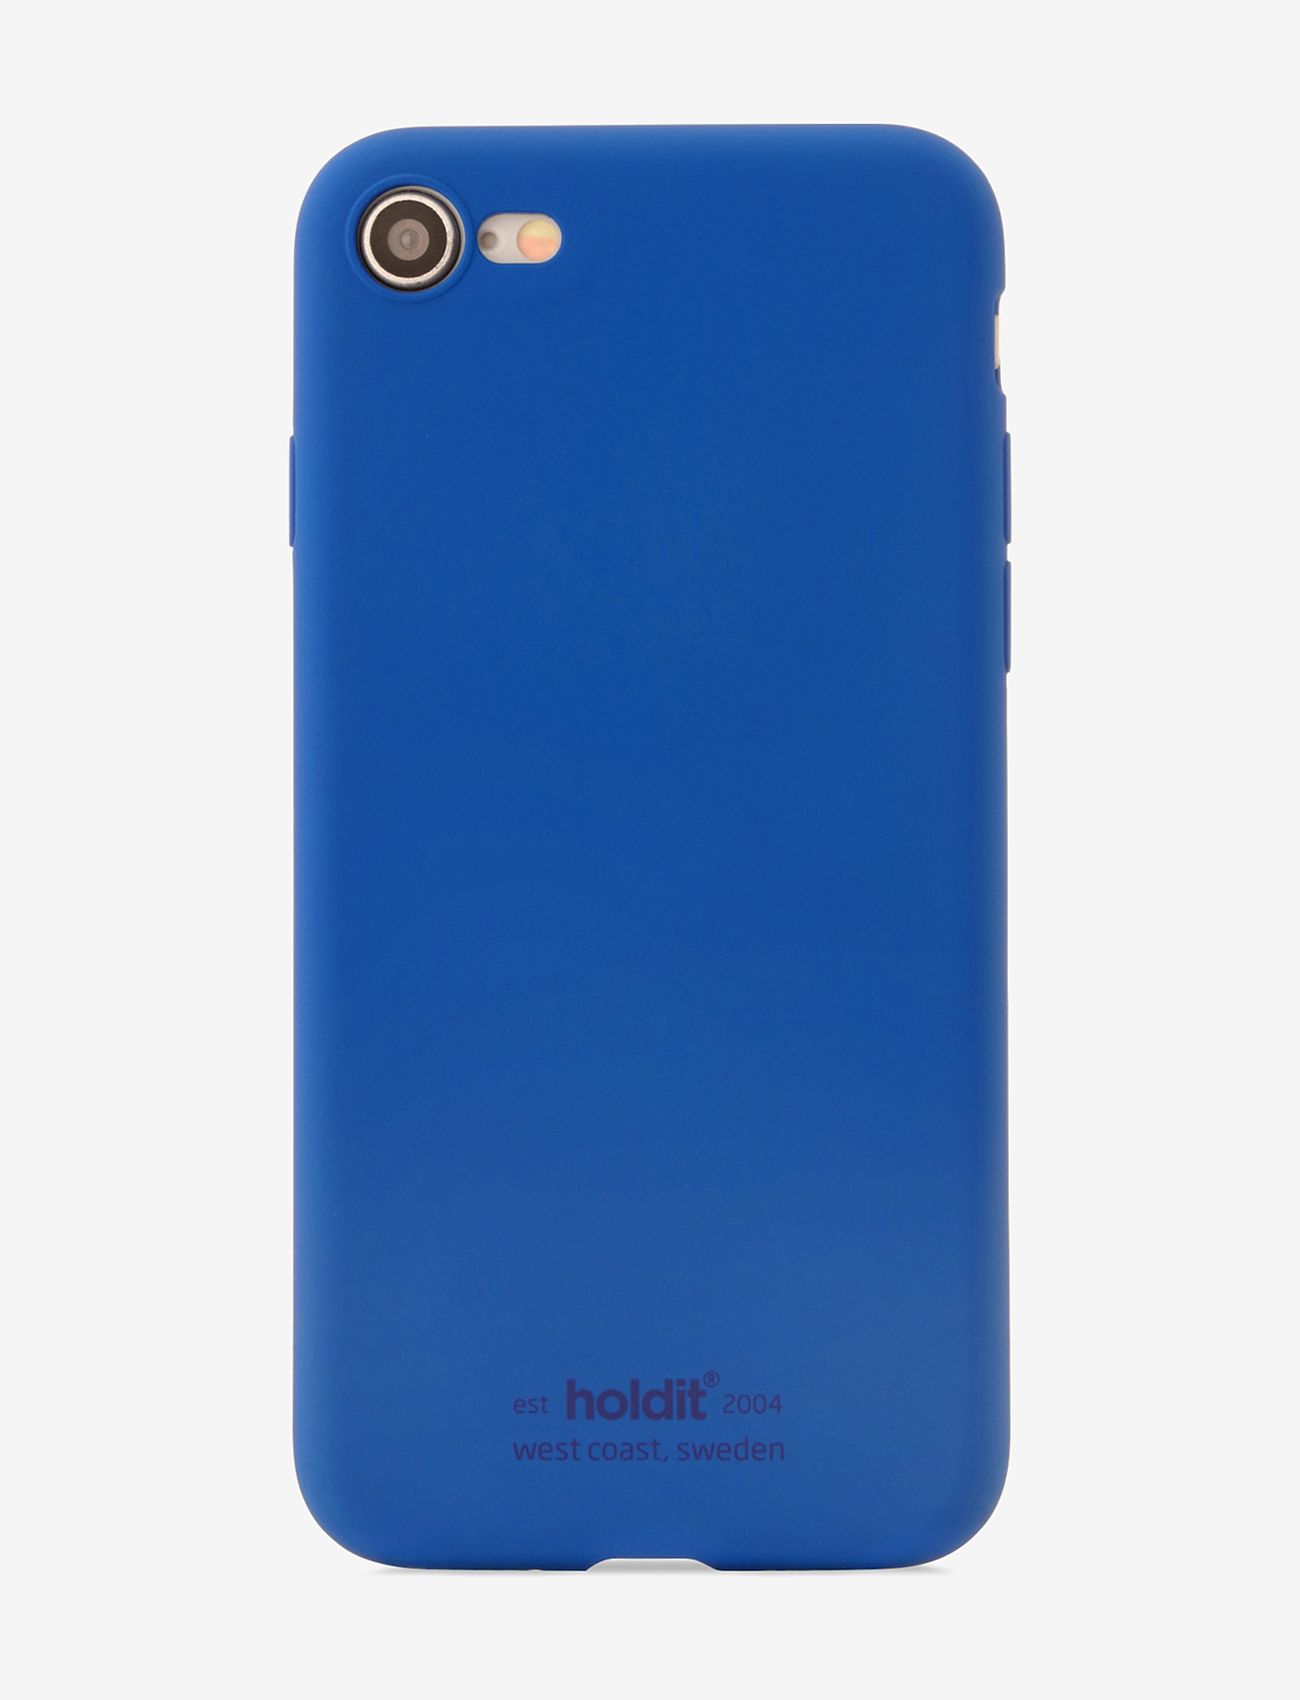 Silicone Case Iphone 7 8 Se Royal Blue 19 90 Holdit Boozt Com